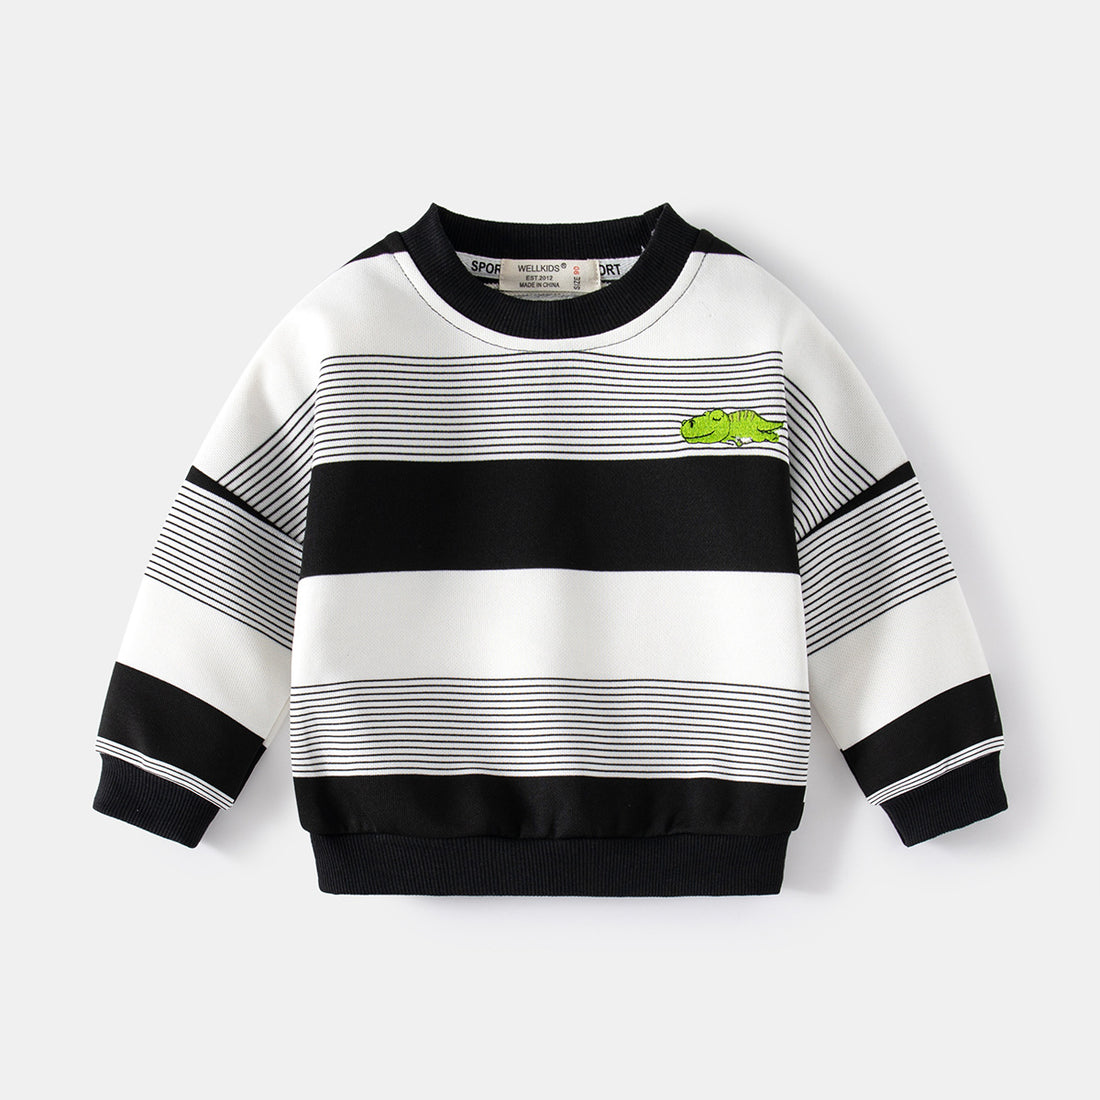 [513731] - Atasan Sweater Lengan Panjang Import Anak Laki-Laki - Motif Crocodile Stripe